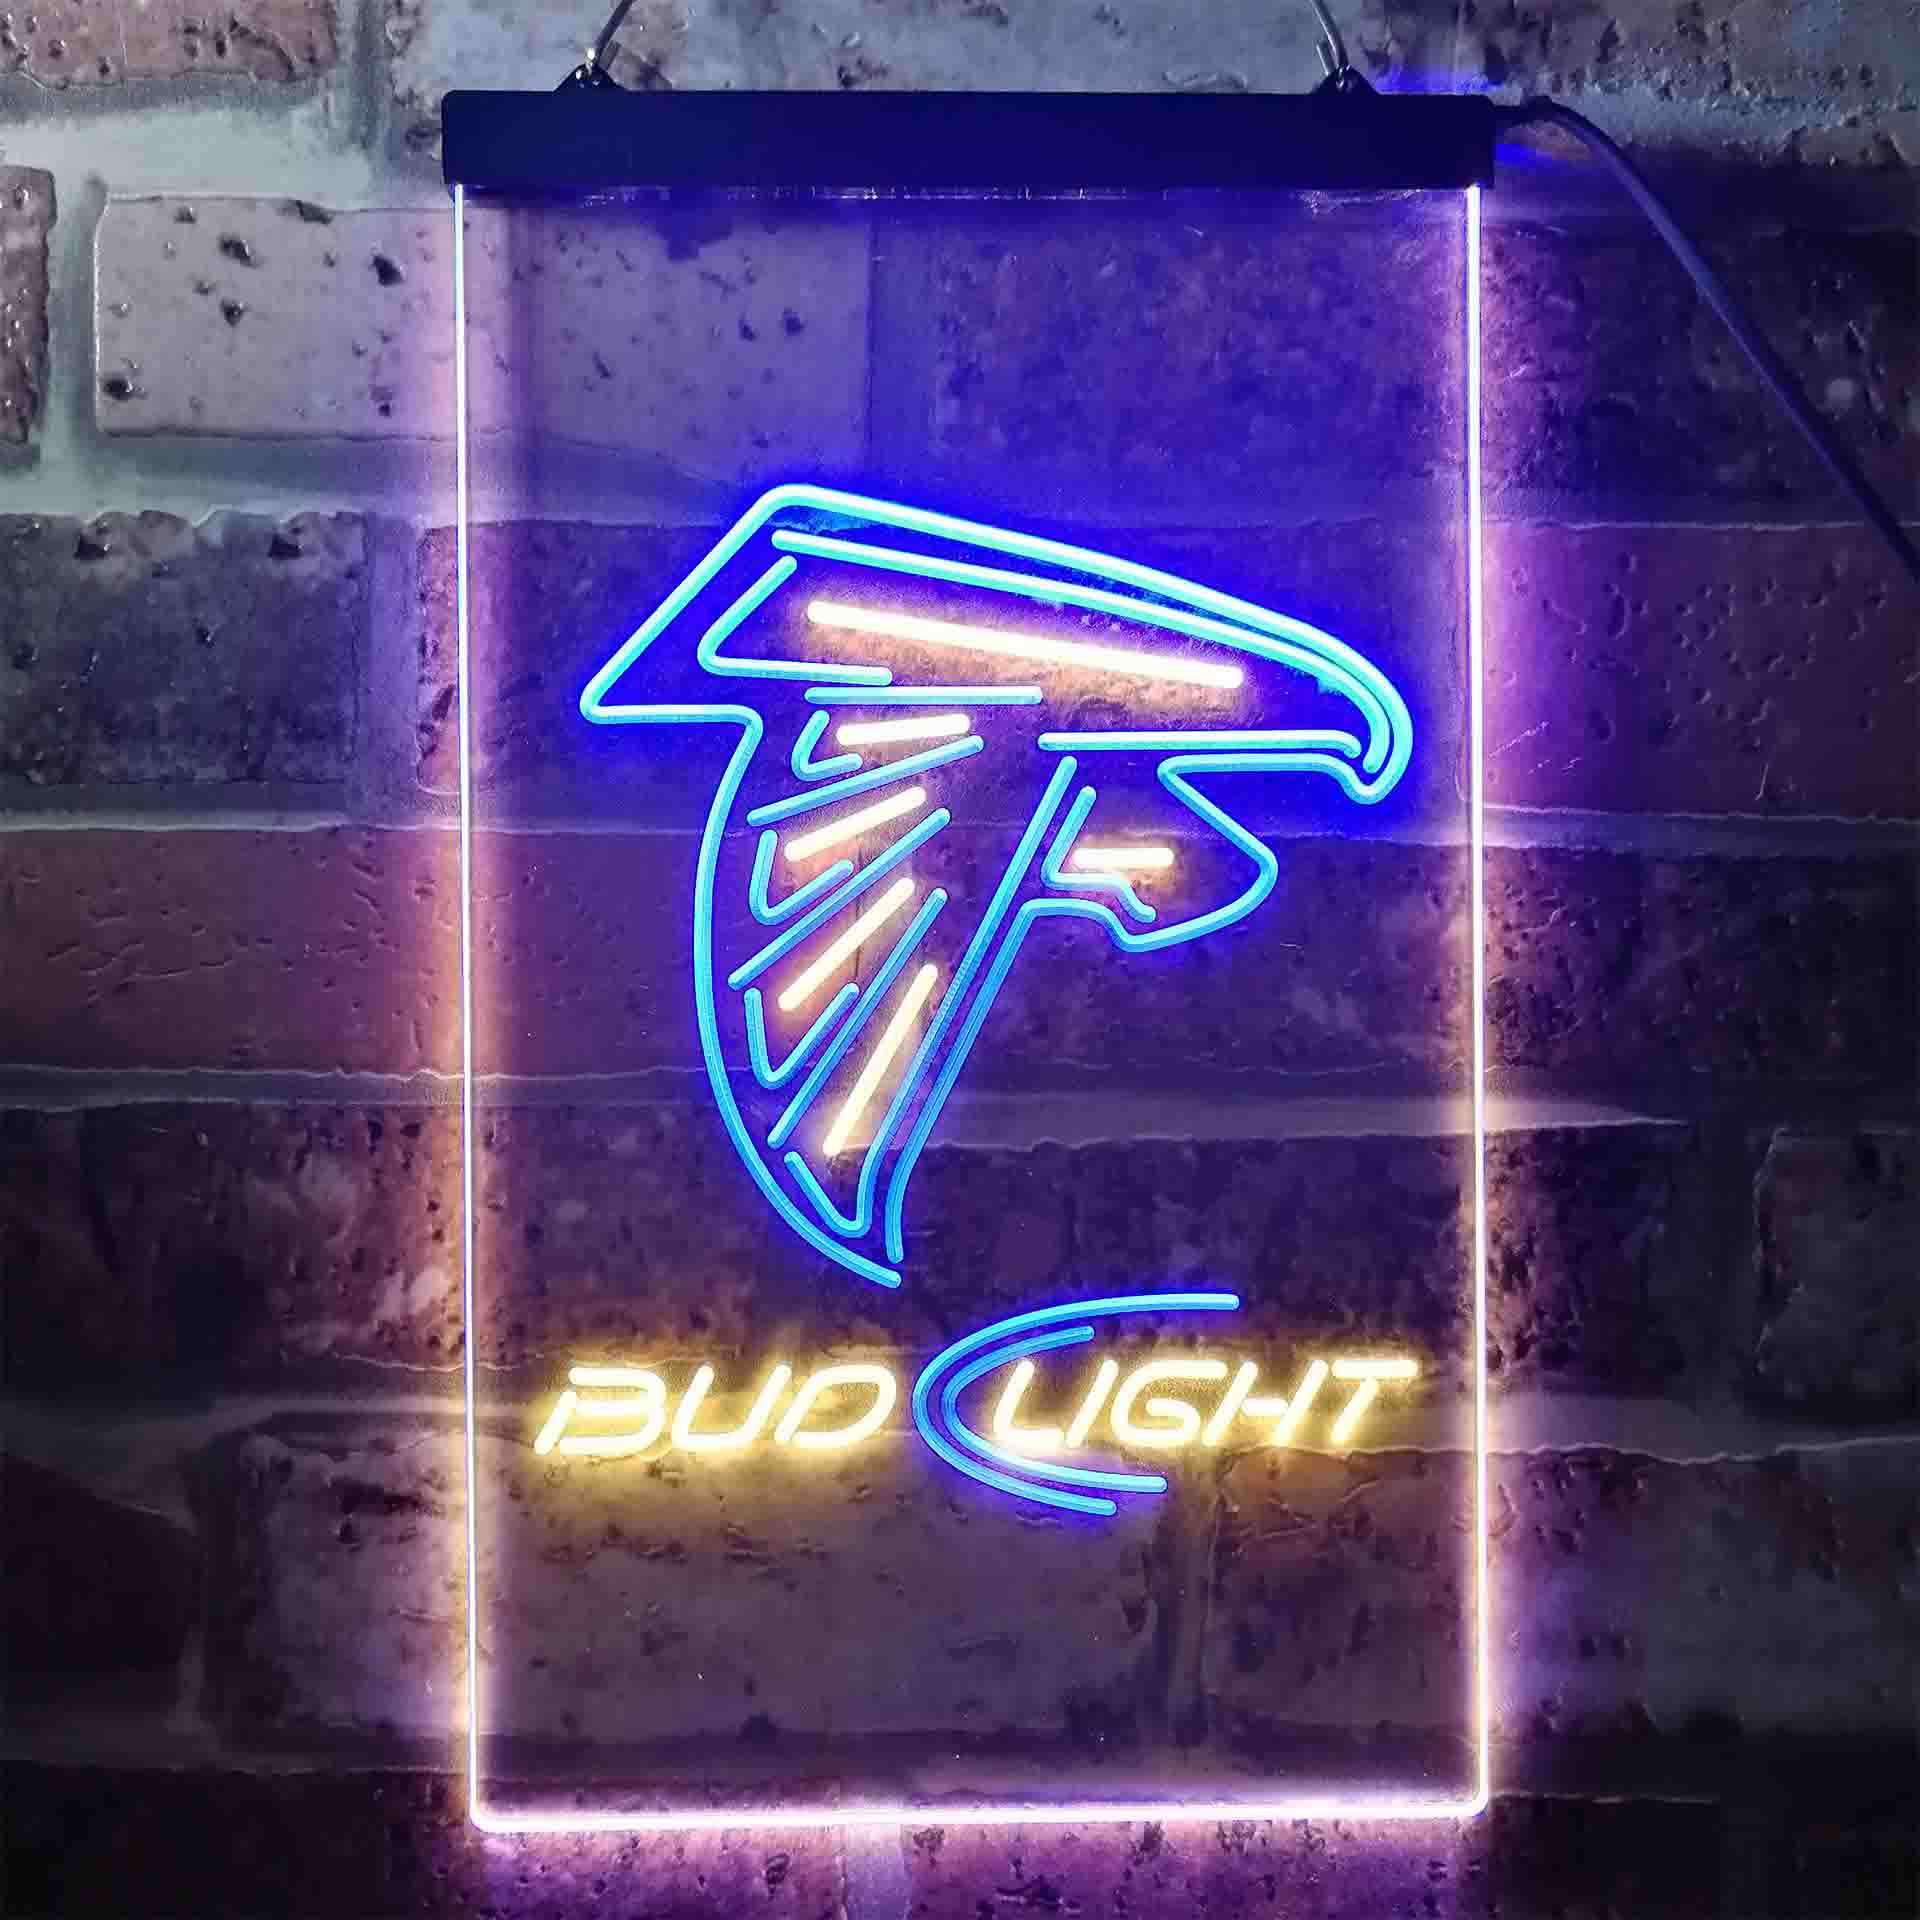 Atlanta Falcons Bud Light Neon-Like LED Sign